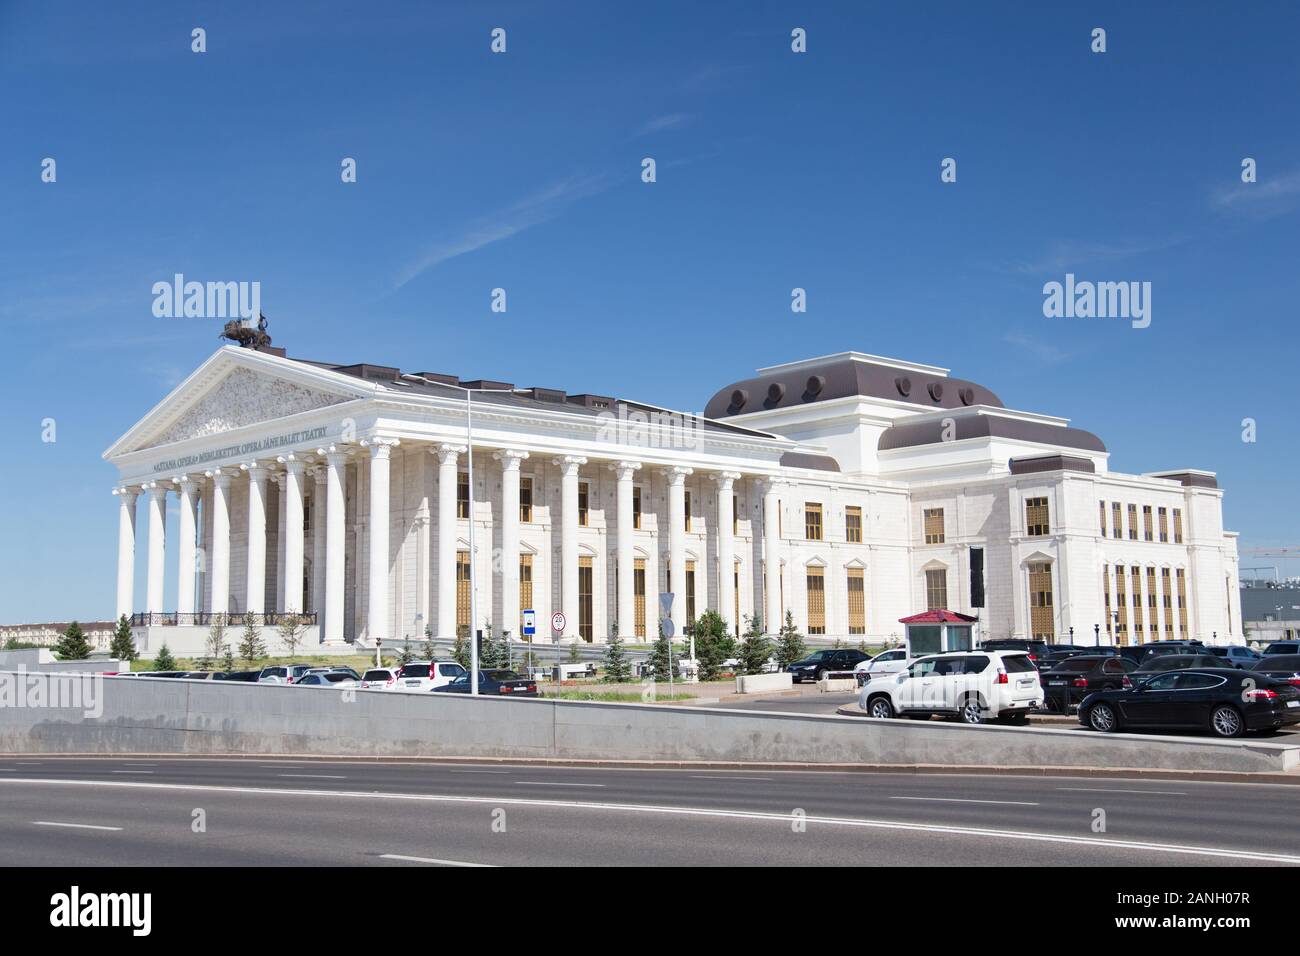 Astana opera building in Nur-sultan, Kazakhstan Stock Photo